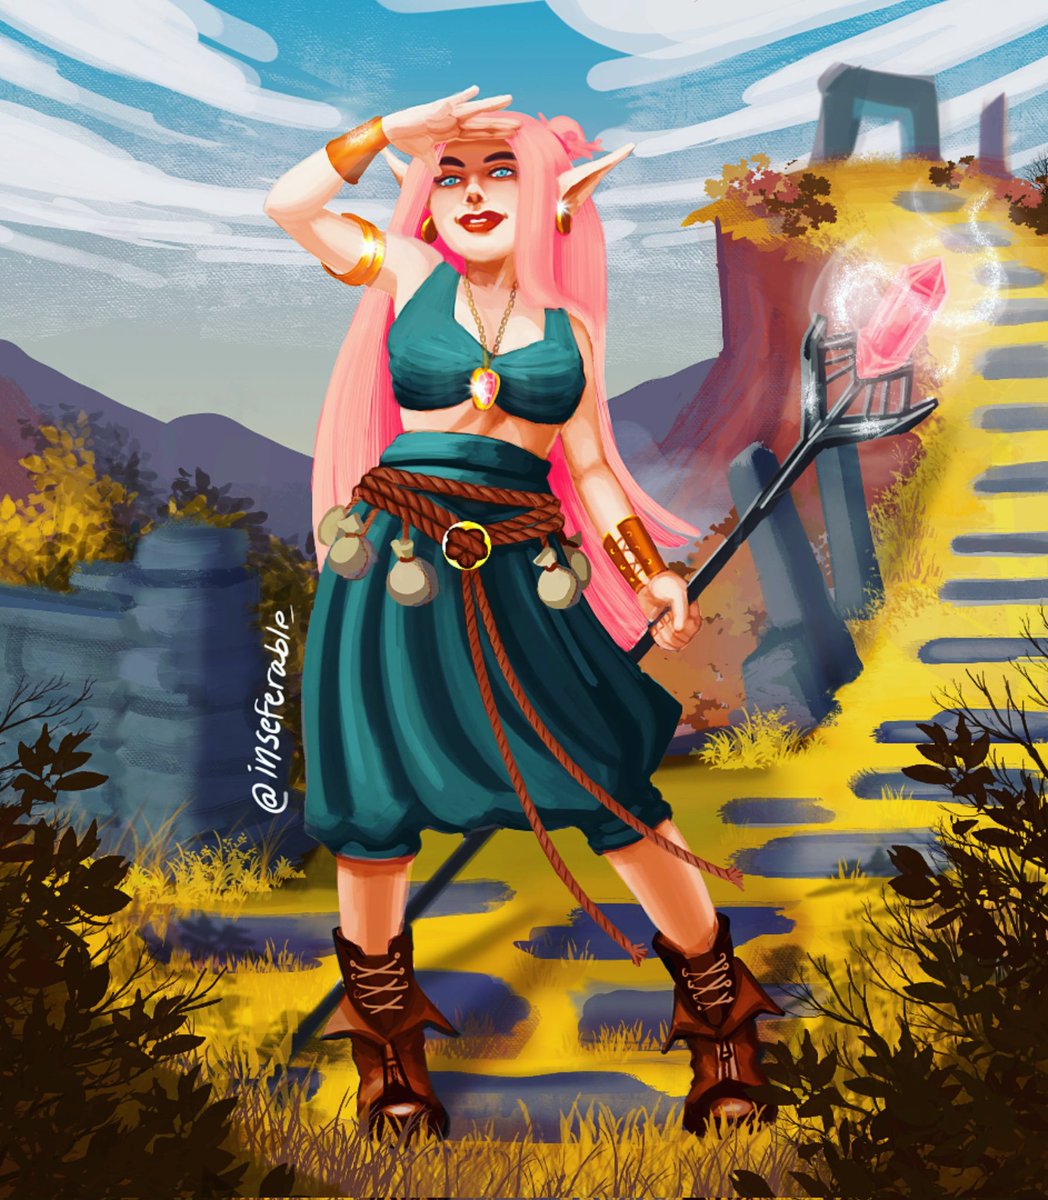 Full color illustration of an OC, elven mage Aruna 💎🧝🏻‍♀️

#illustration #fantasy #digitalillustration #DnDcharacter #dungeonsanddragons #fantasyillustrator